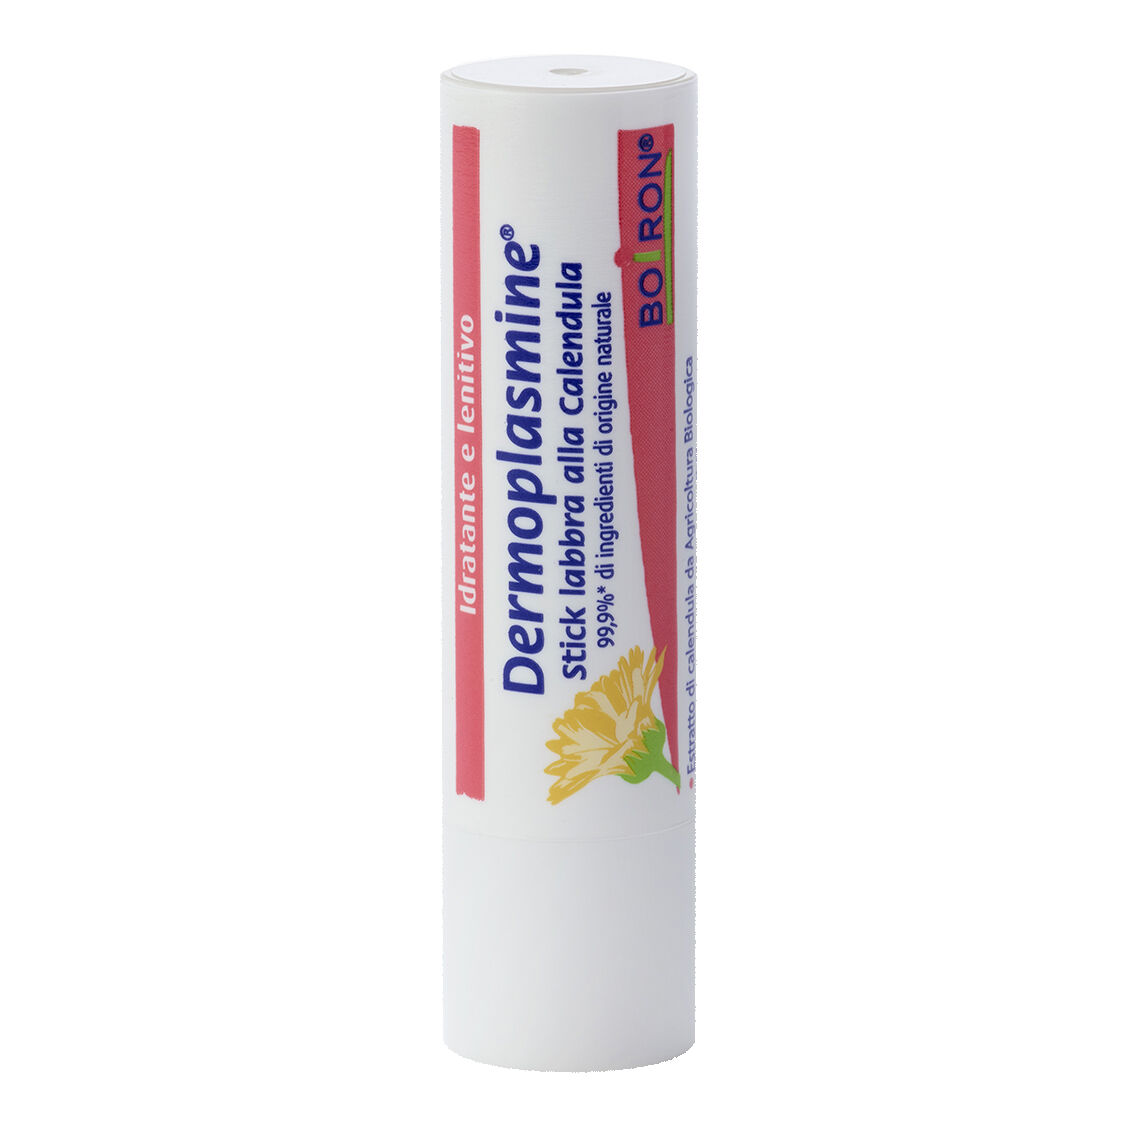 BOIRON Dermoplasmine stick labbra calendula idratante e lenitivo 4 g